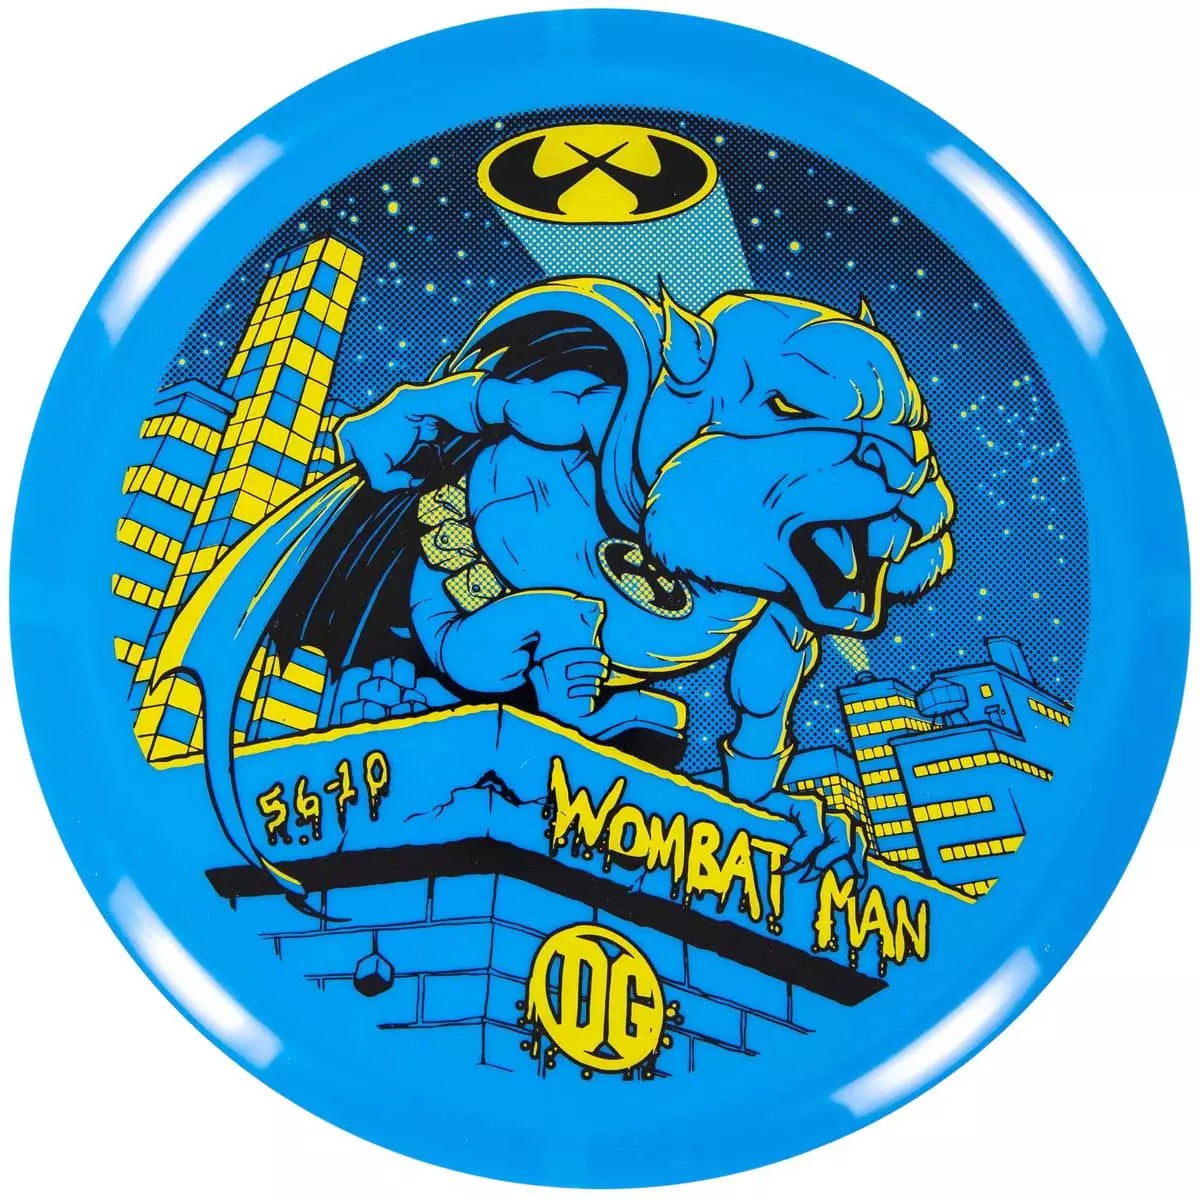 Innova Star Wombat3 Disc - Wombatman Stamp